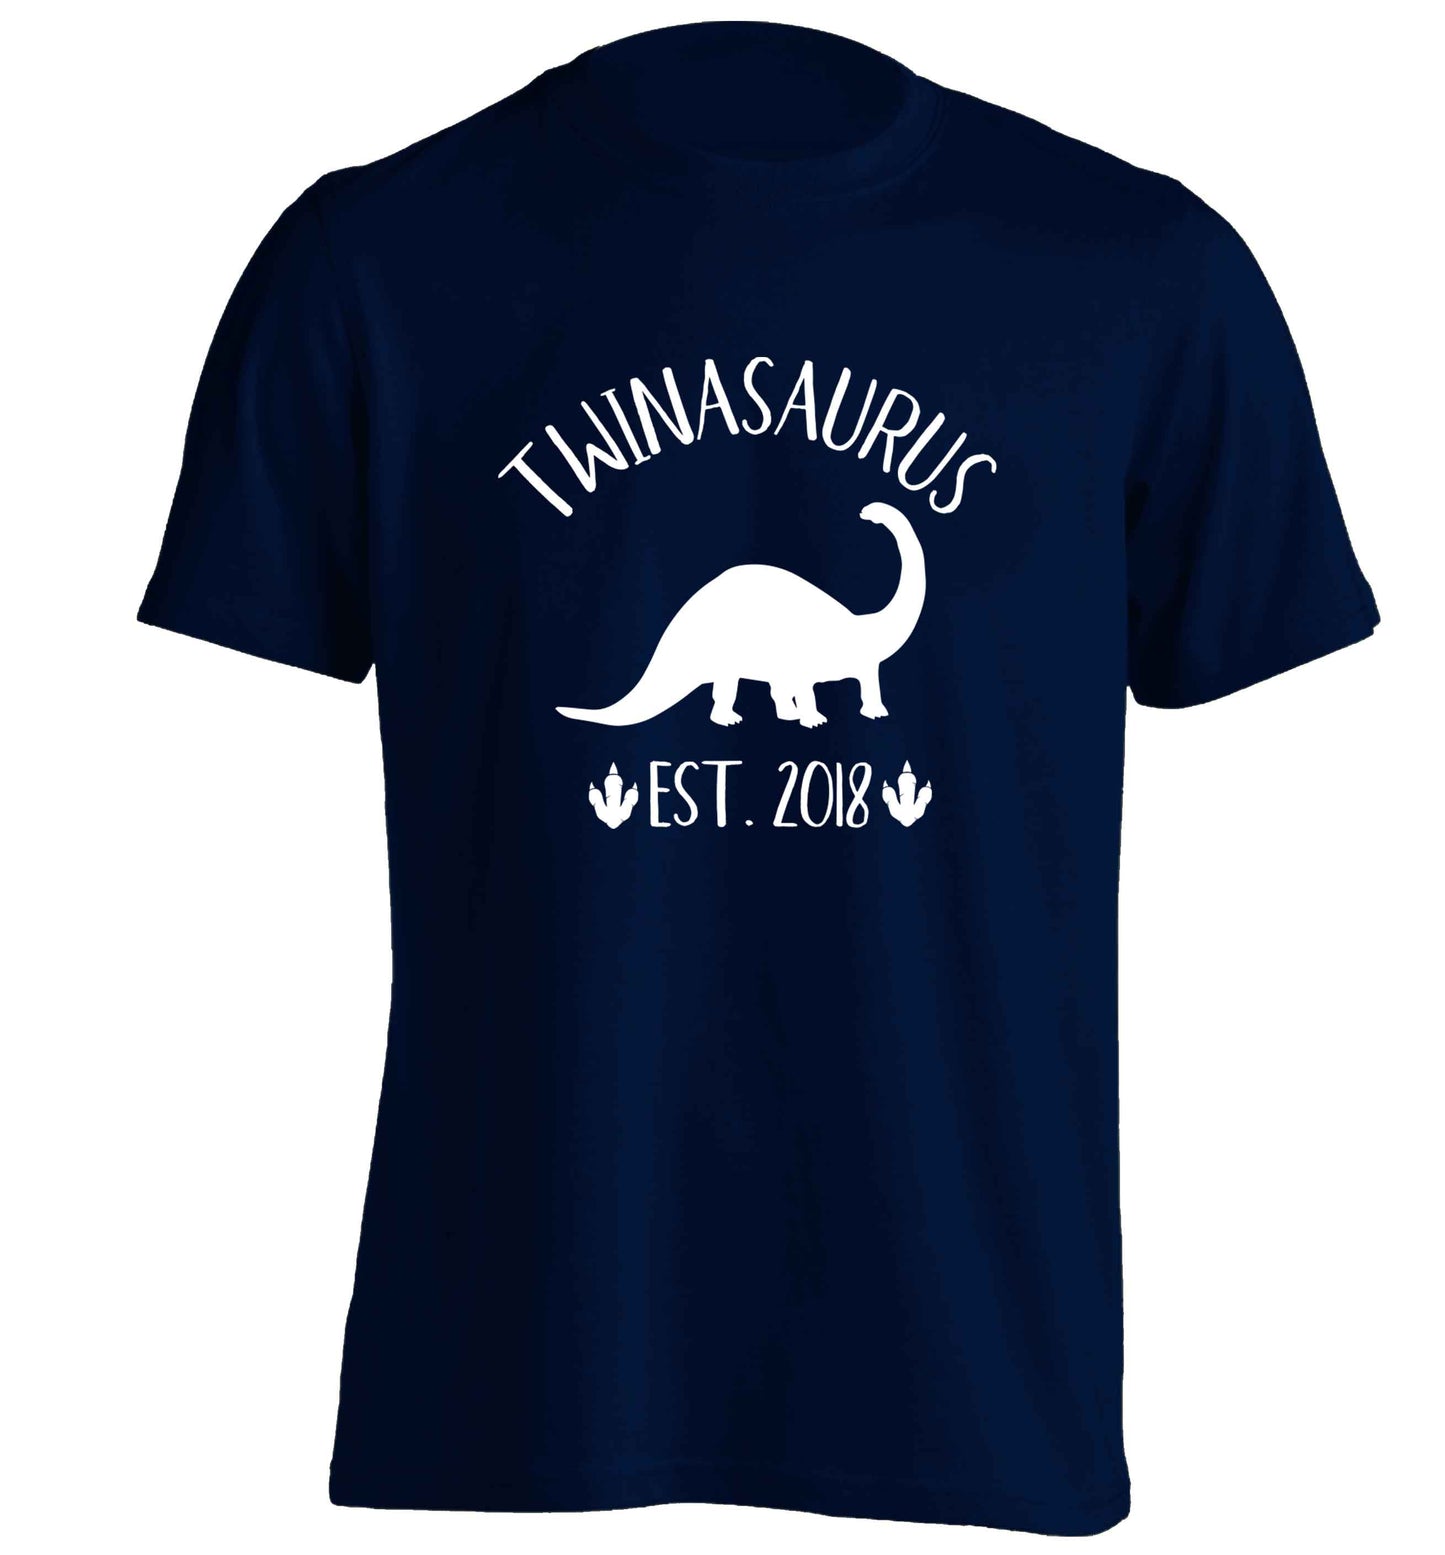 Personalised twinasaurus since (custom date) adults unisex navy Tshirt 2XL